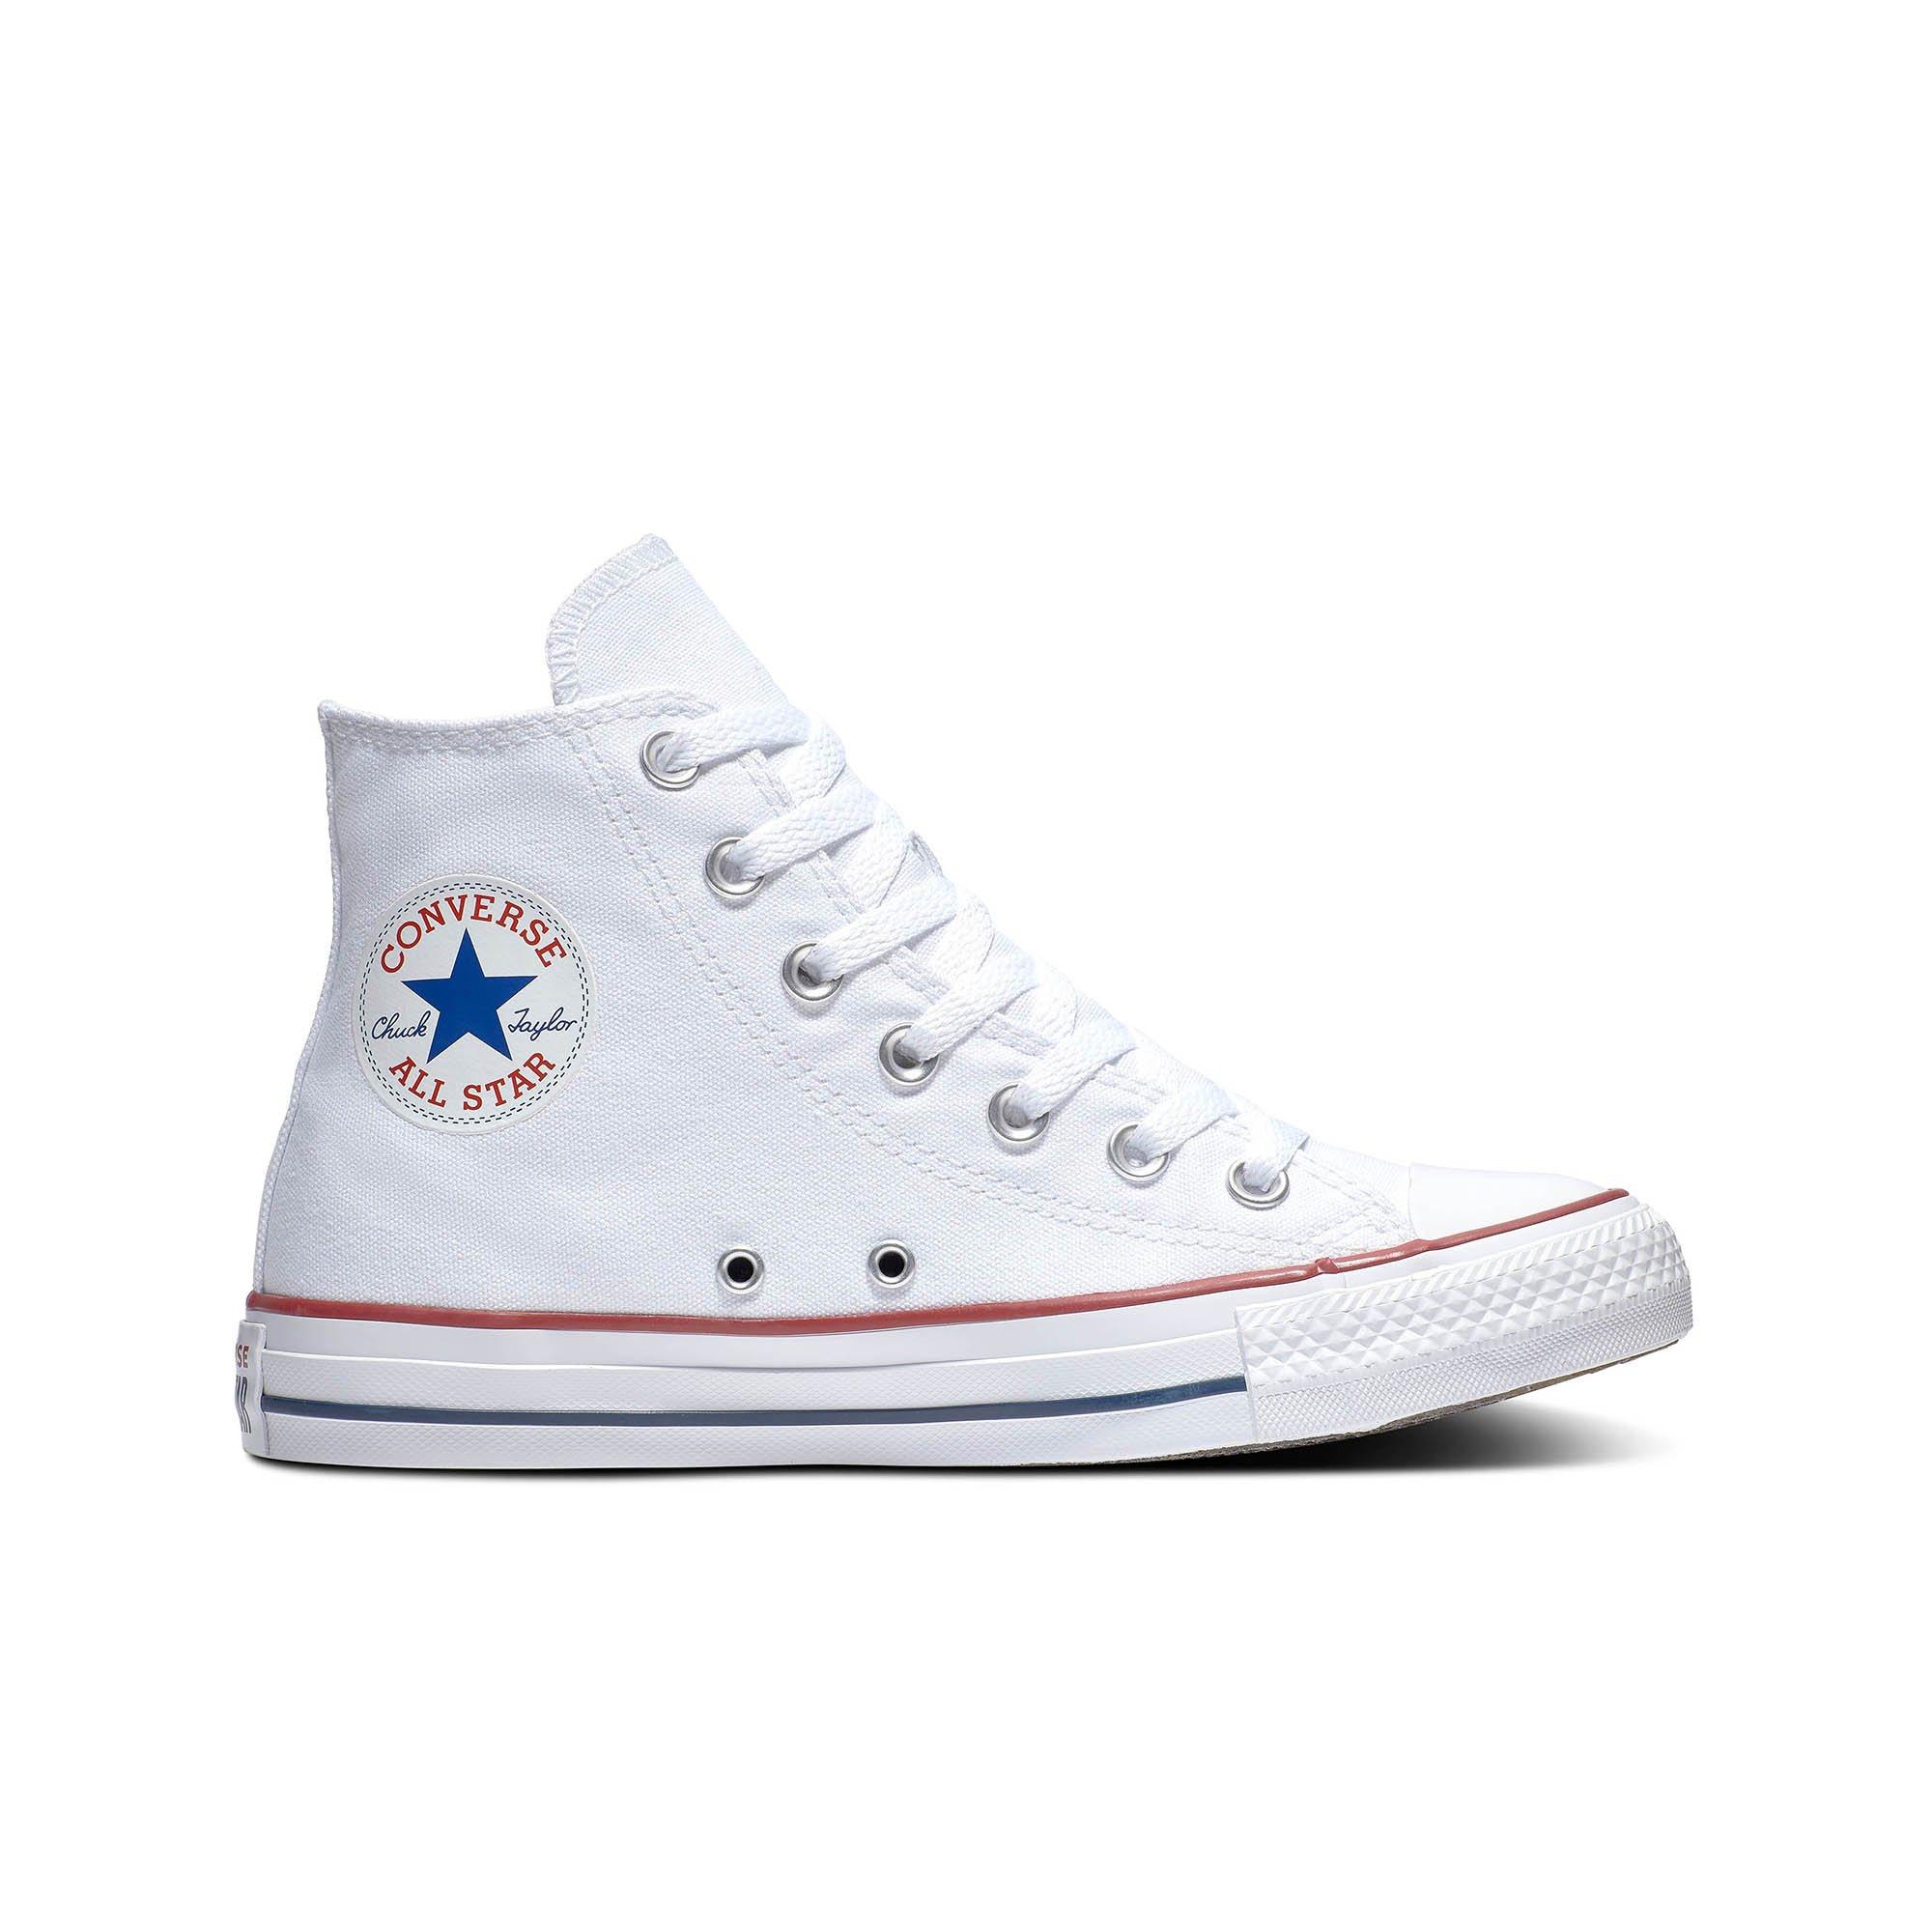 Converse Chuck Taylor All Star Shoe